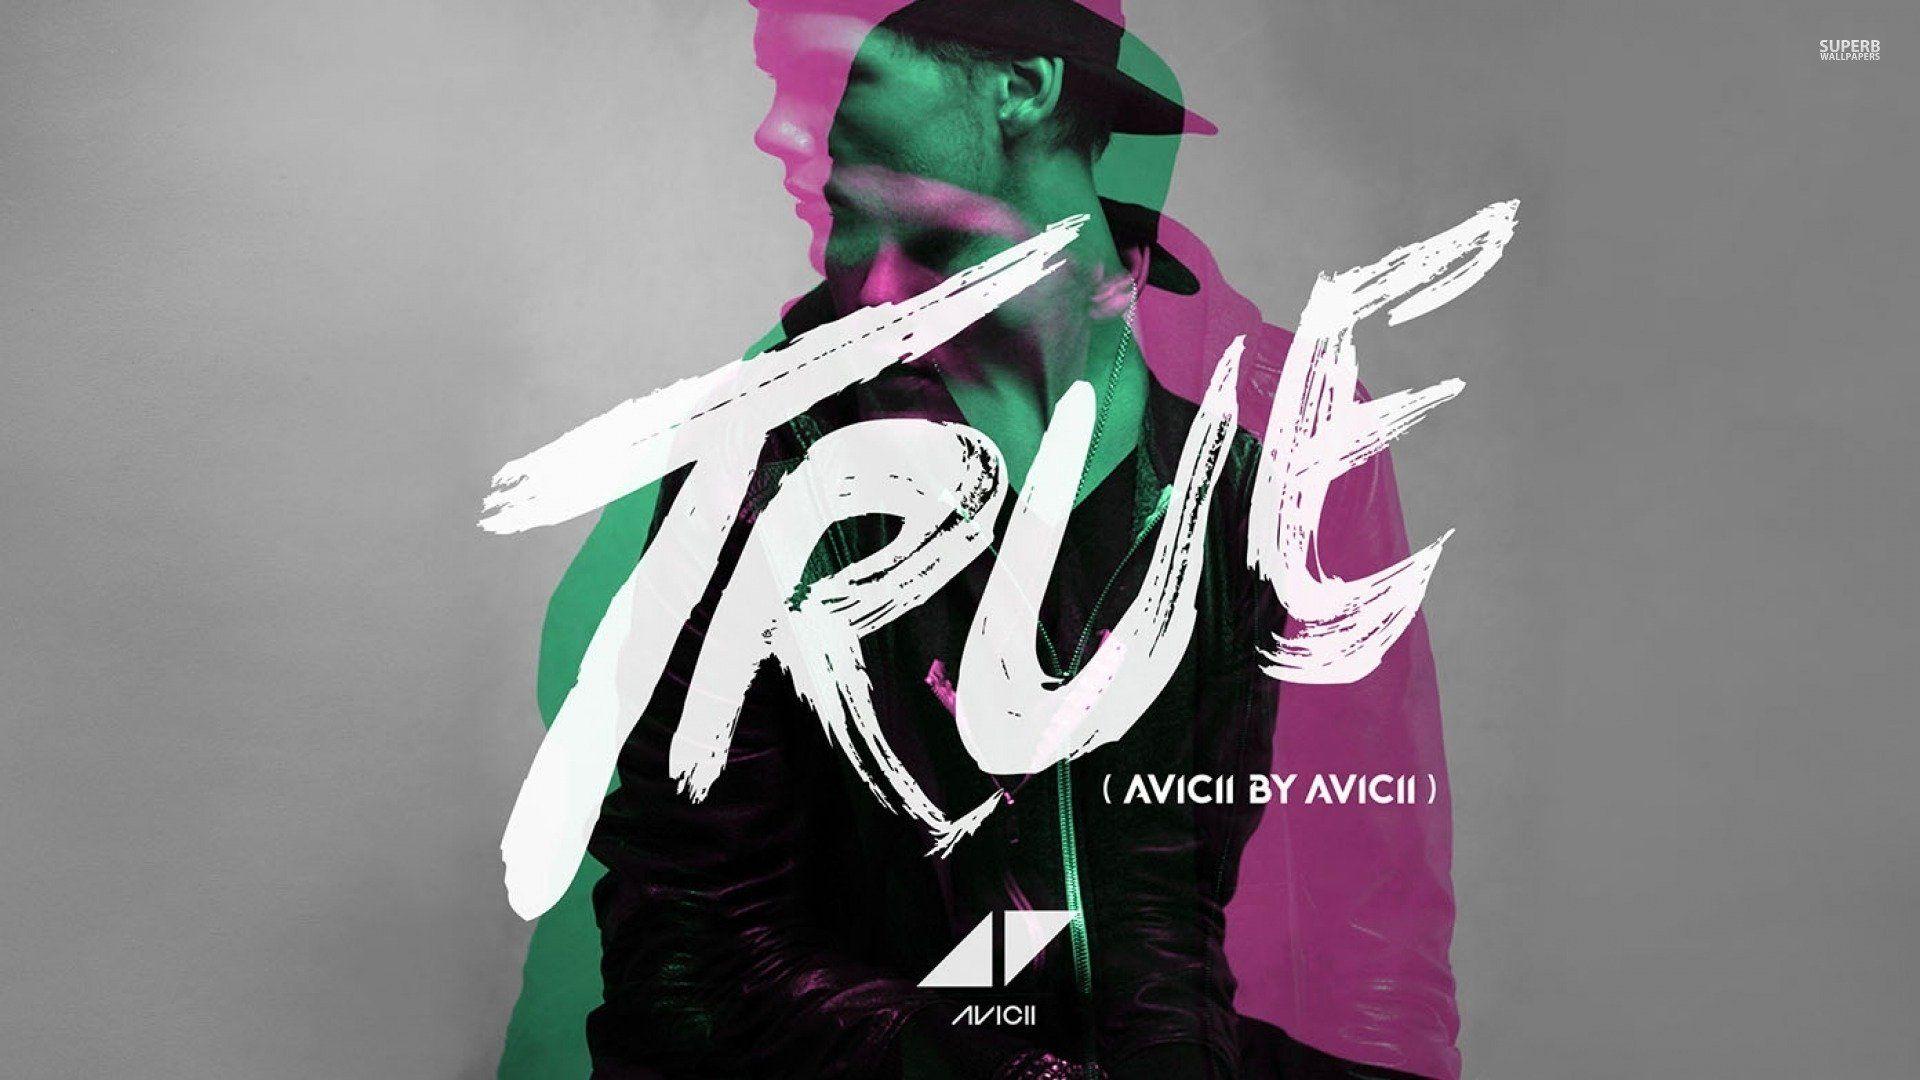 True (Avicii by Avicii) HD Wallpaper. Background Image